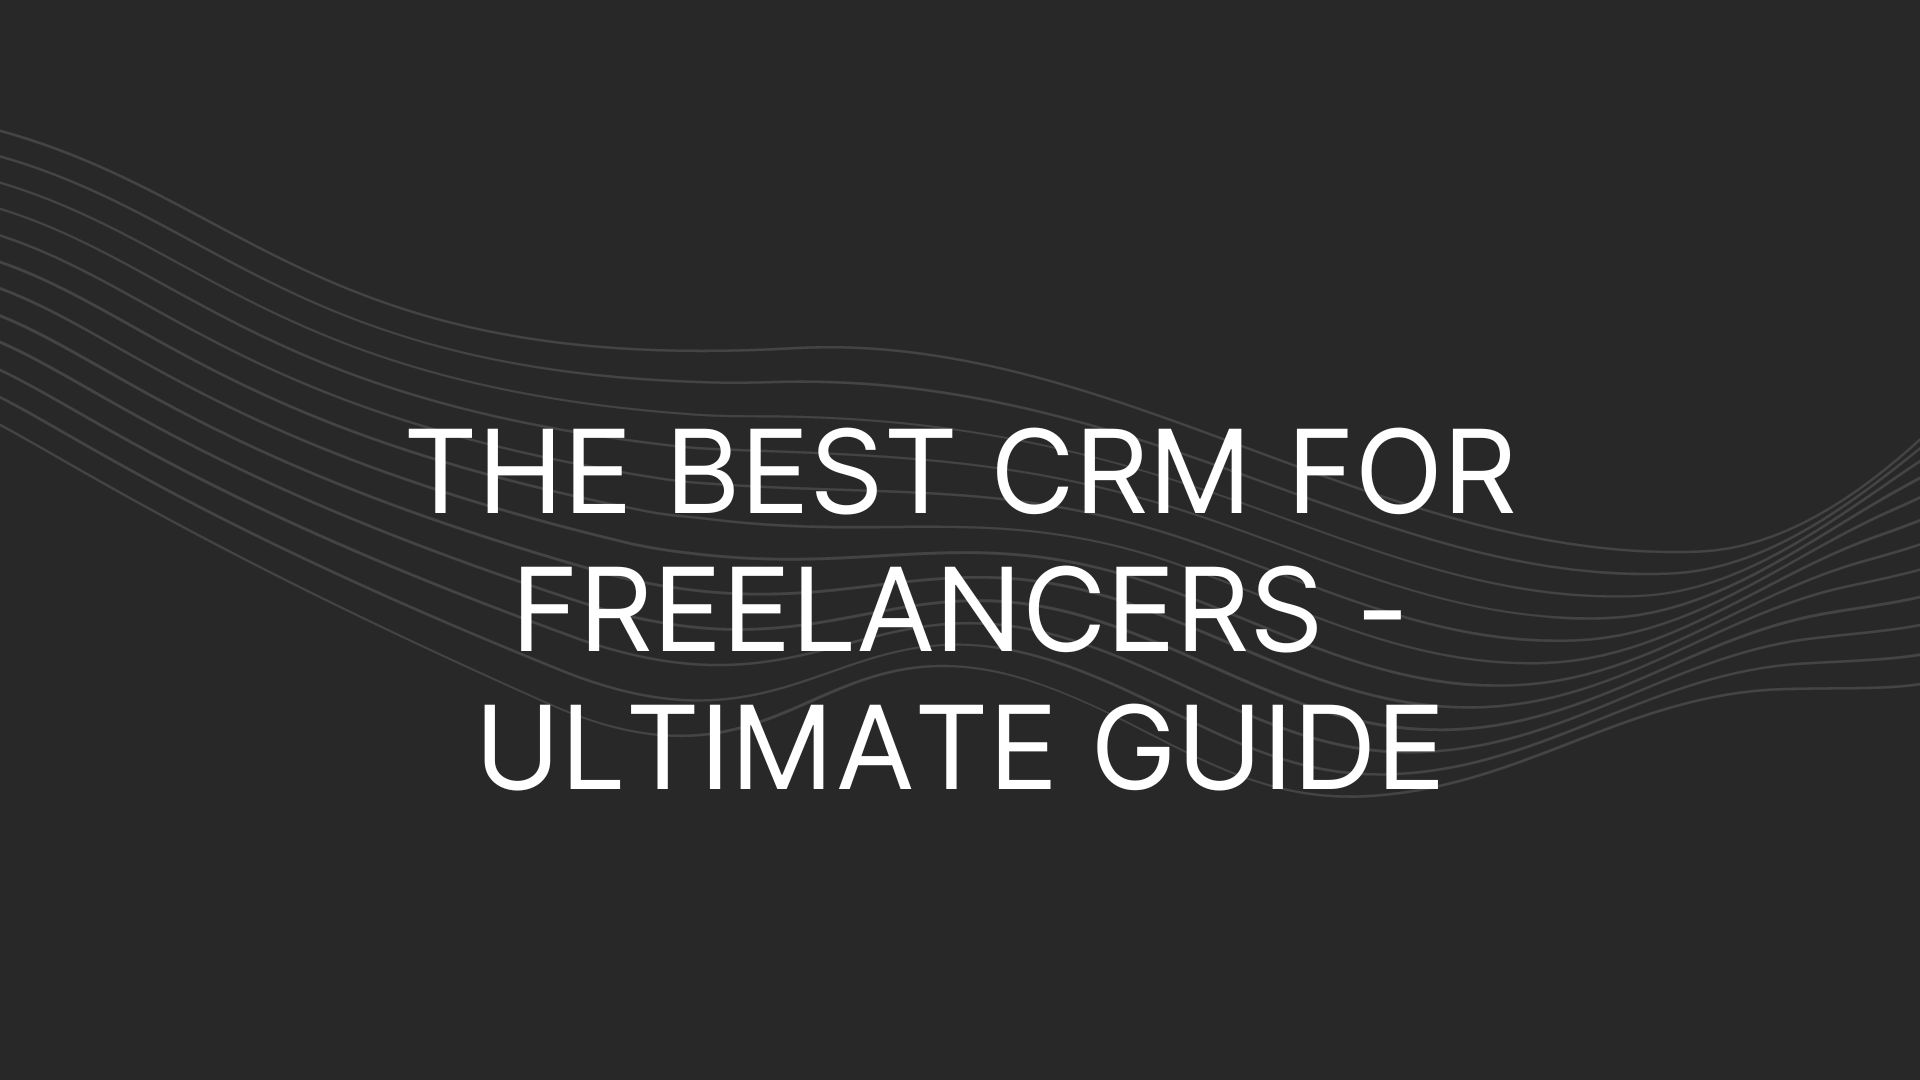 Best CRM for Freelancers